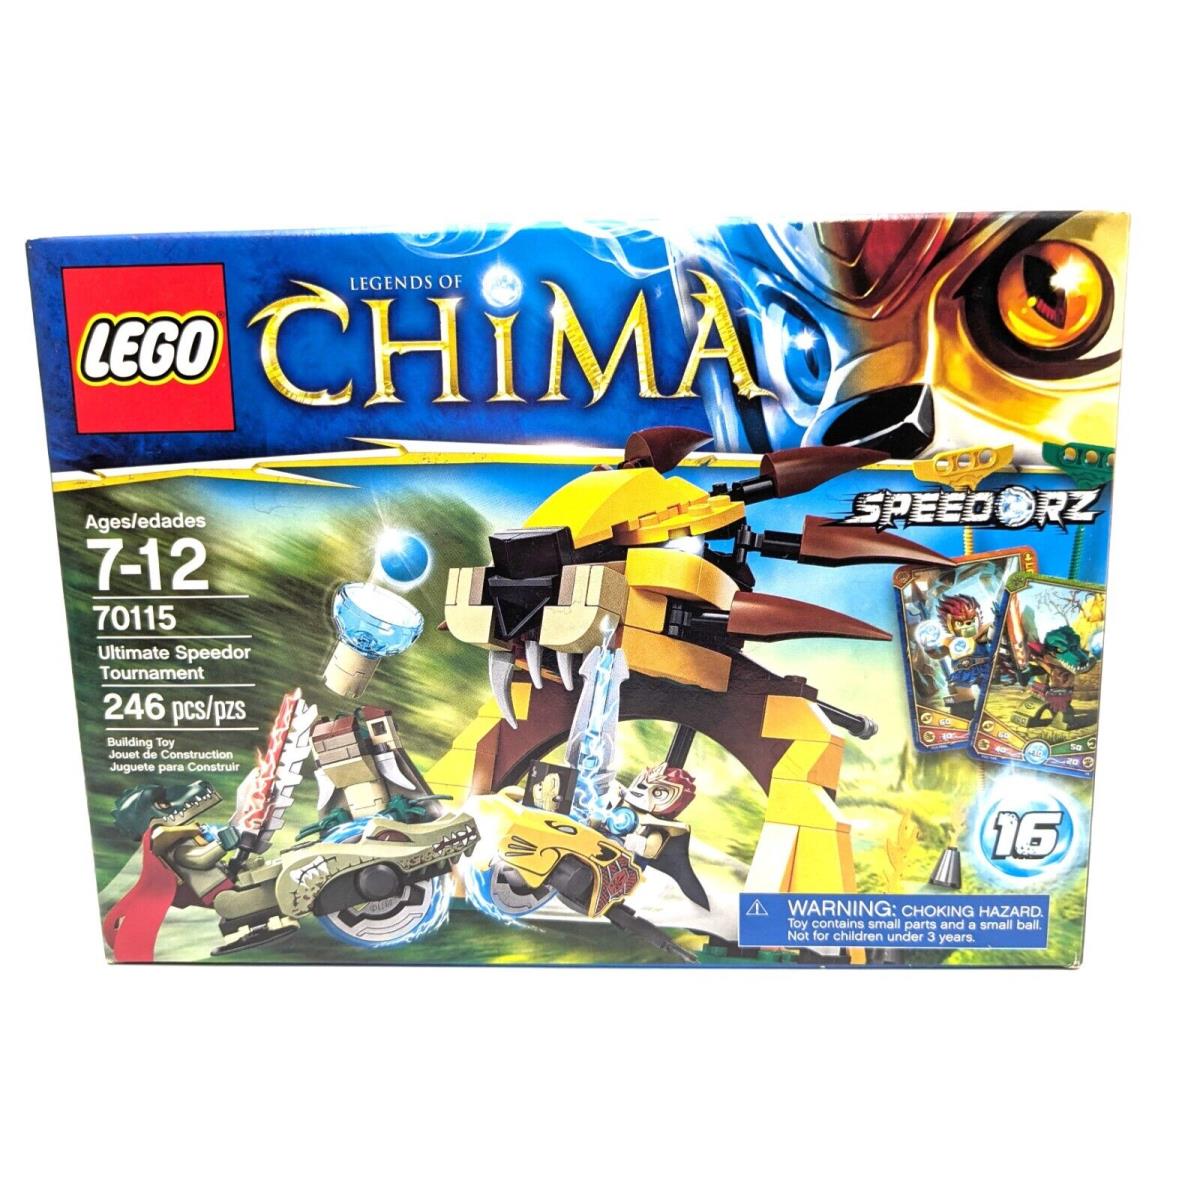 Lego Chima Set 70115 Ultimate Speedor Tournament